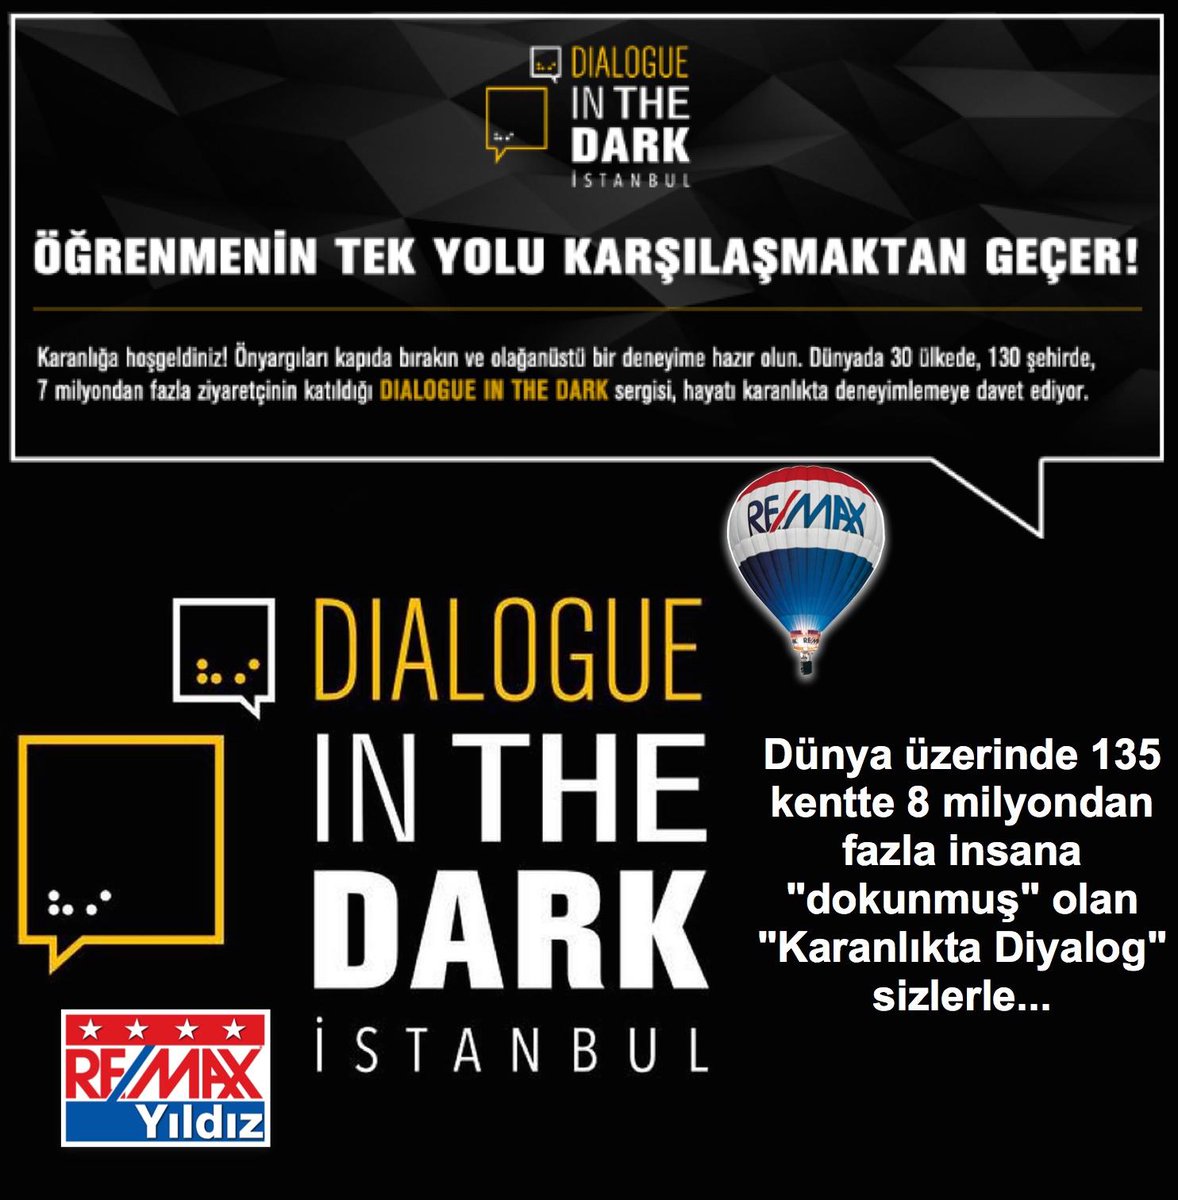 Karanlıkta Diyalog 1haziran-31temmuz
#remaxyildiz #dialogueinthedark #karanlıktadiyalog
facebook.com/remaxyildiz